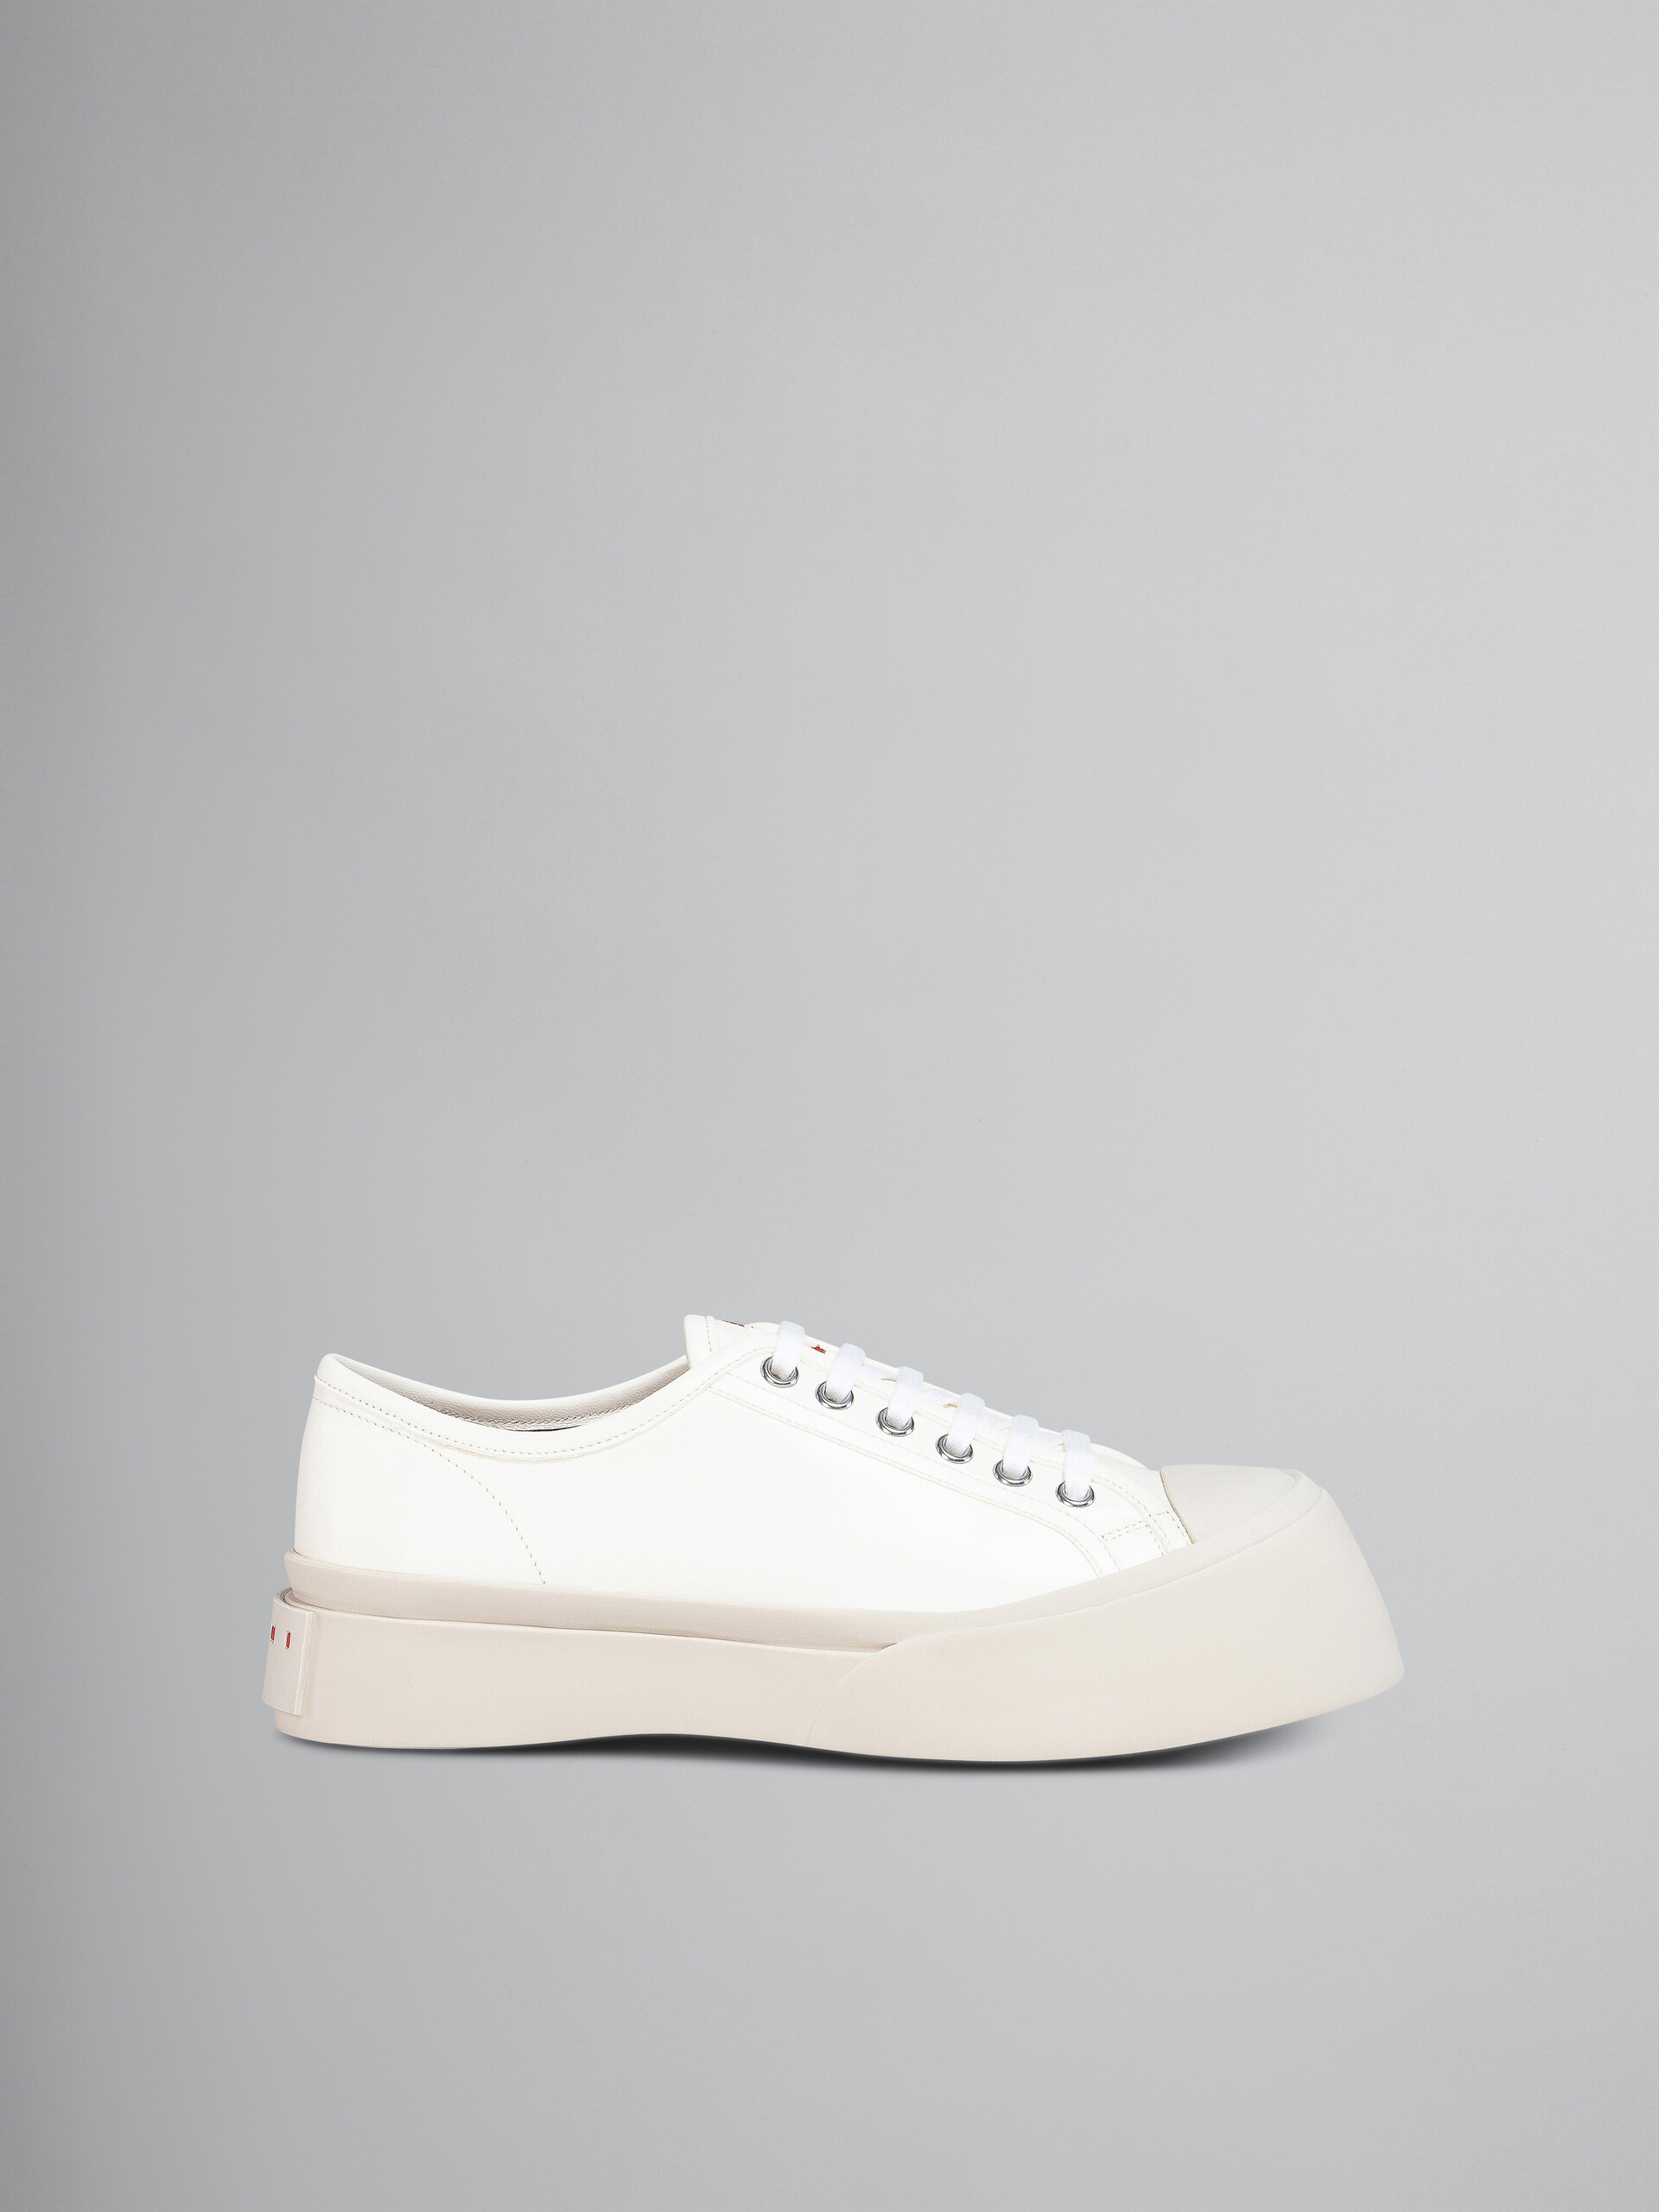 Sneaker PABLO in vitello bianco - Sneakers - Image 1